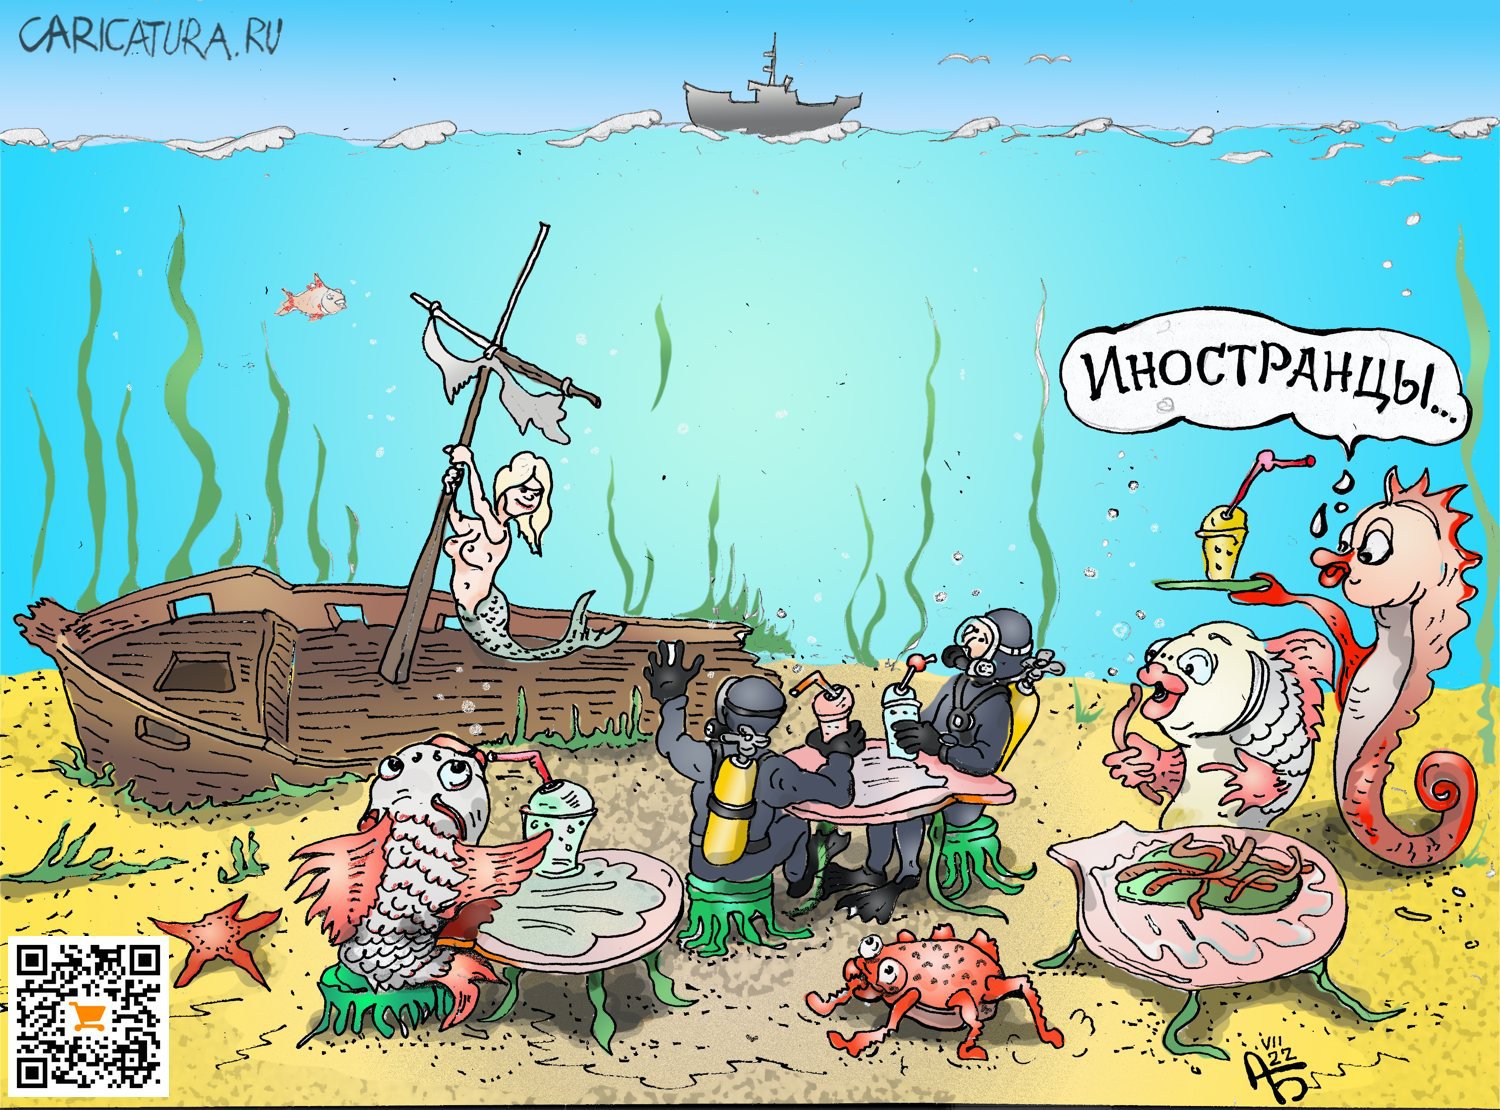 Карикатура "Ресторан "На дне"", Александр Богданов